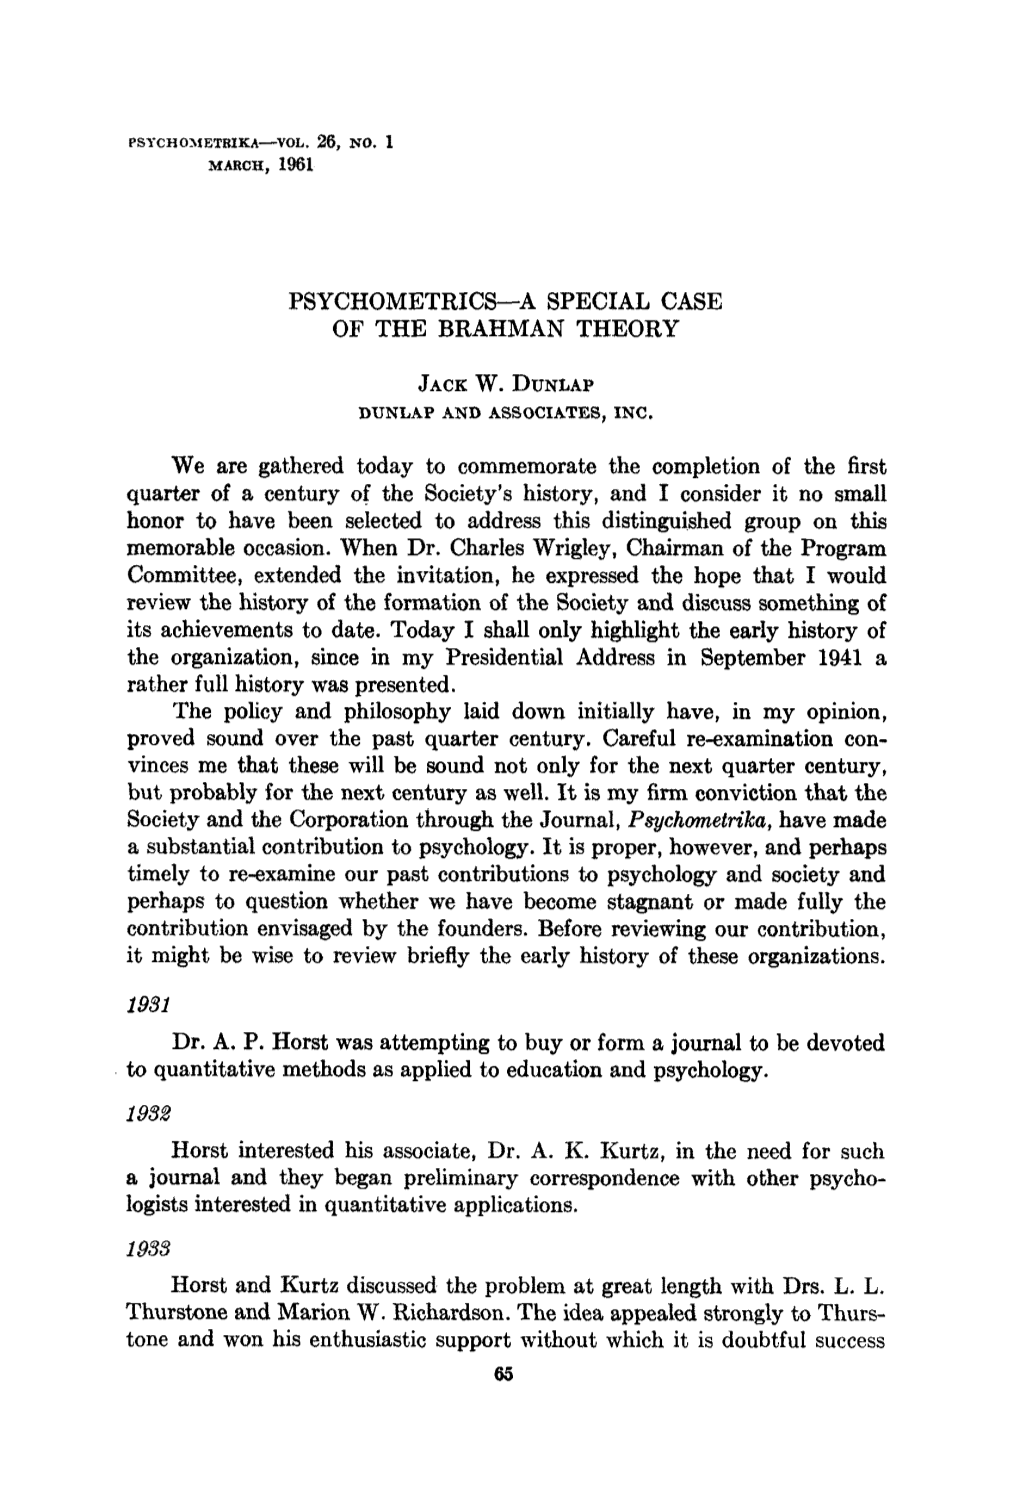 Psychometrics--A Special Case of the Brahman Theory Jack W. Dunlap